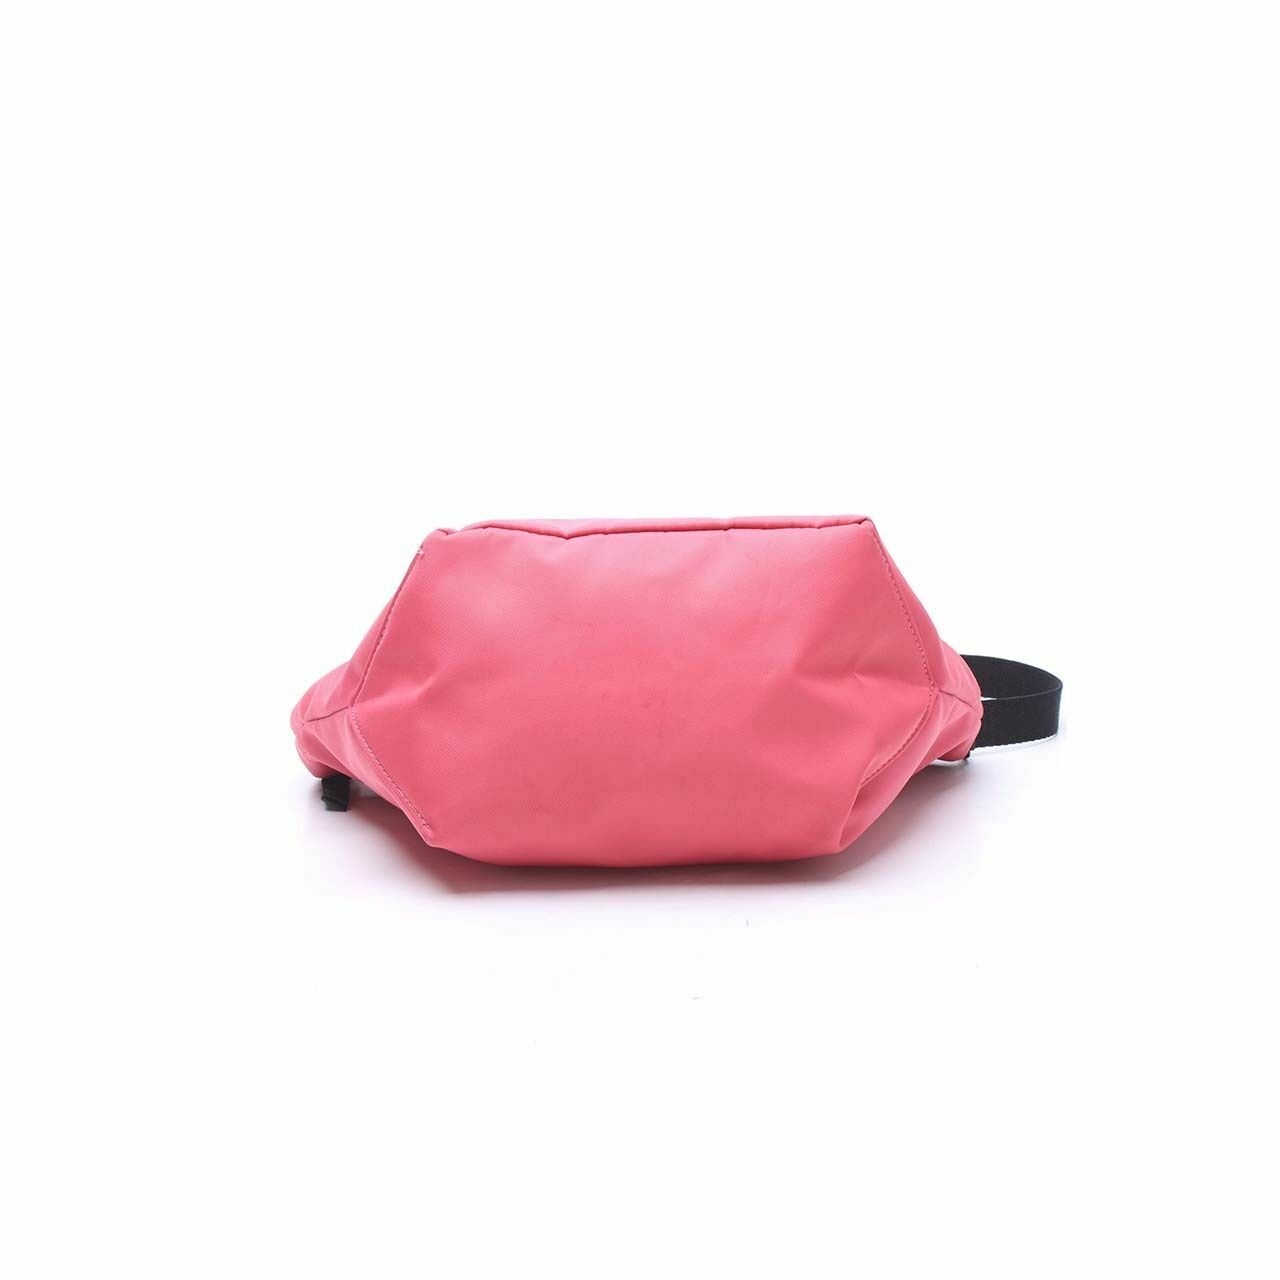 UNIQLO Pink Sling Bag